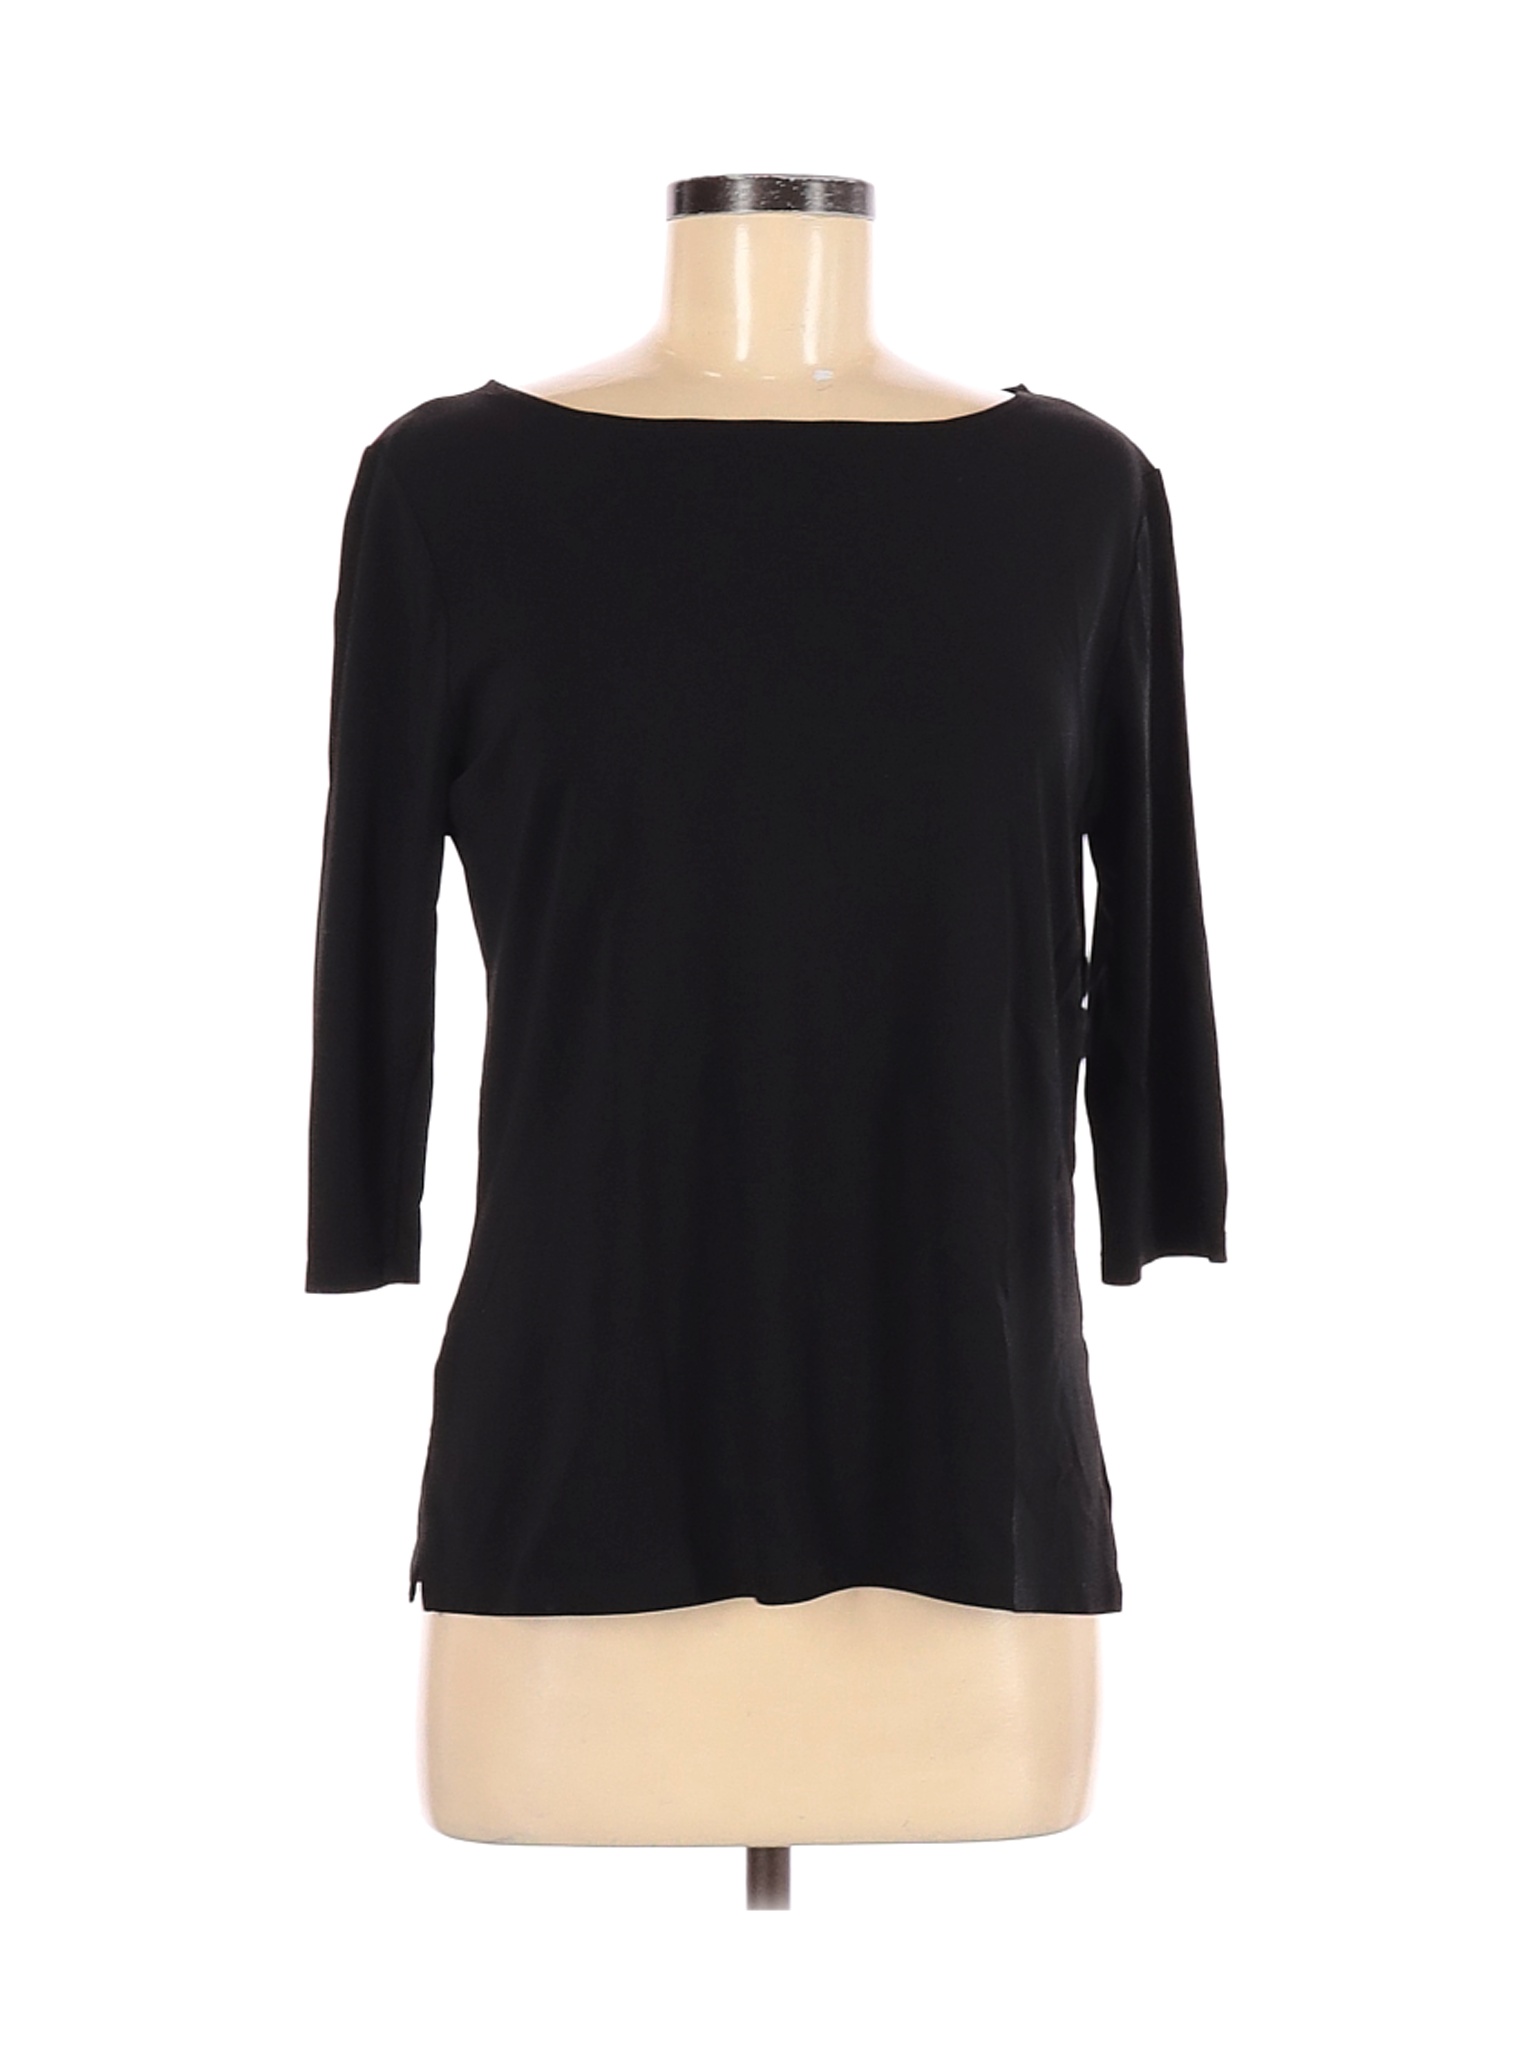 Nina Leonard Women Black 3/4 Sleeve Top M | eBay